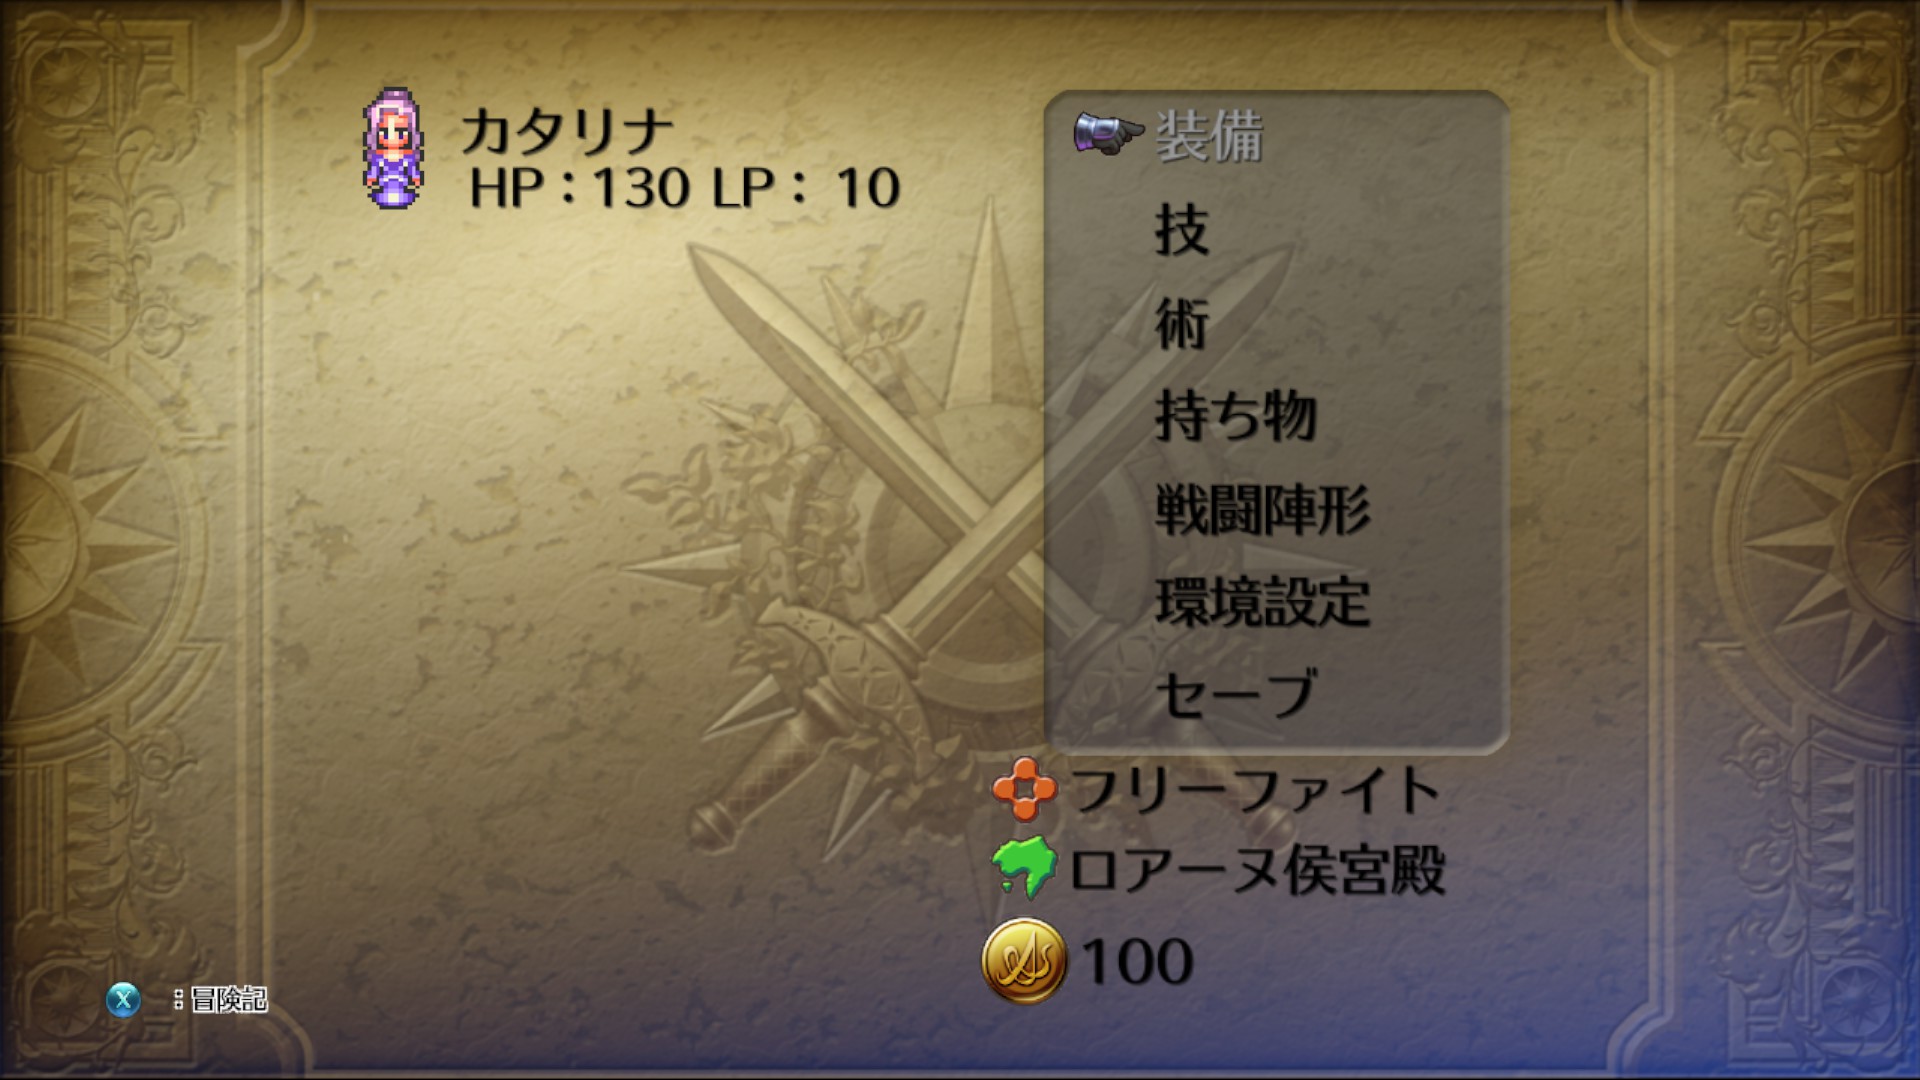 The in-game menu from Romancing SaGa 3, in Japanese